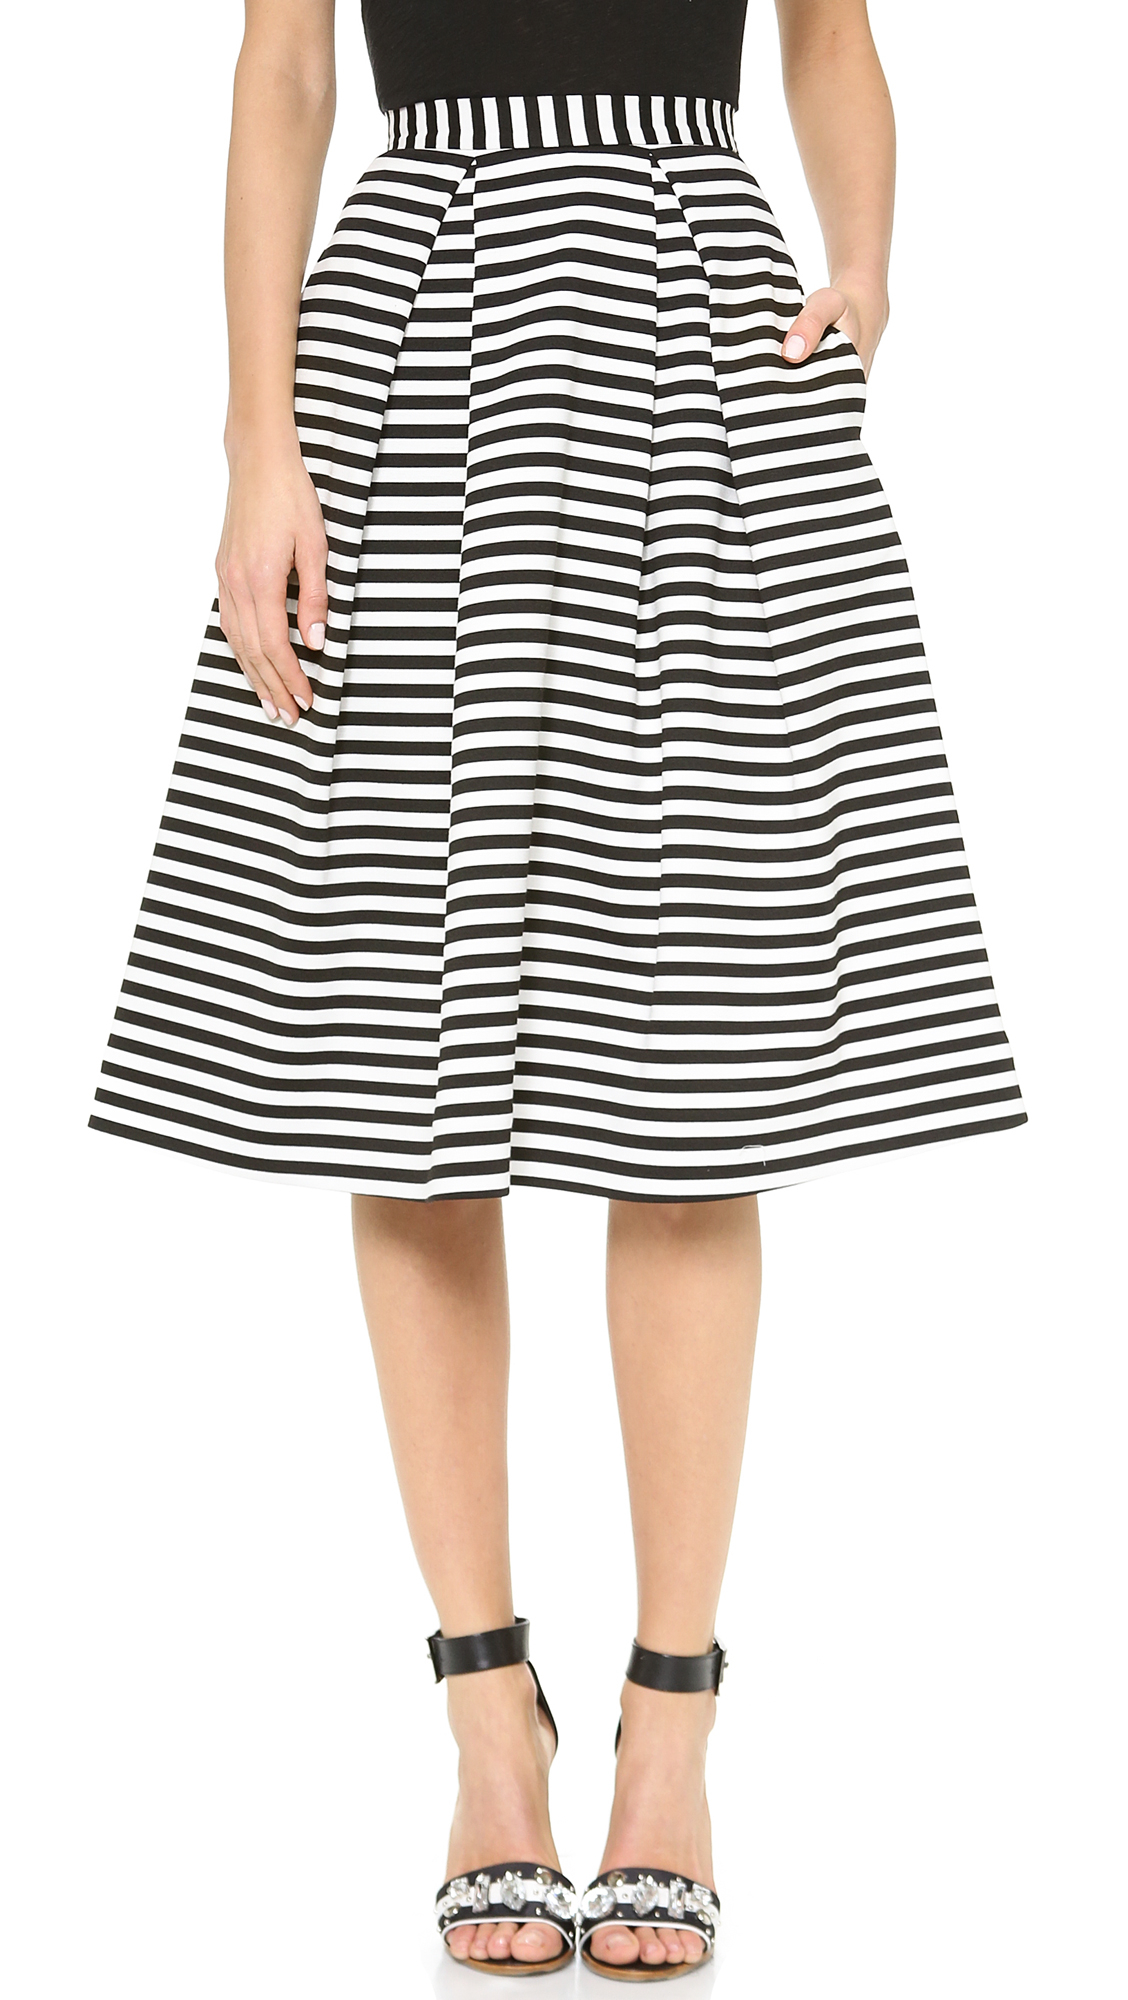 Lyst - Nicholas Striped Ball Gown Skirt White Black in Black